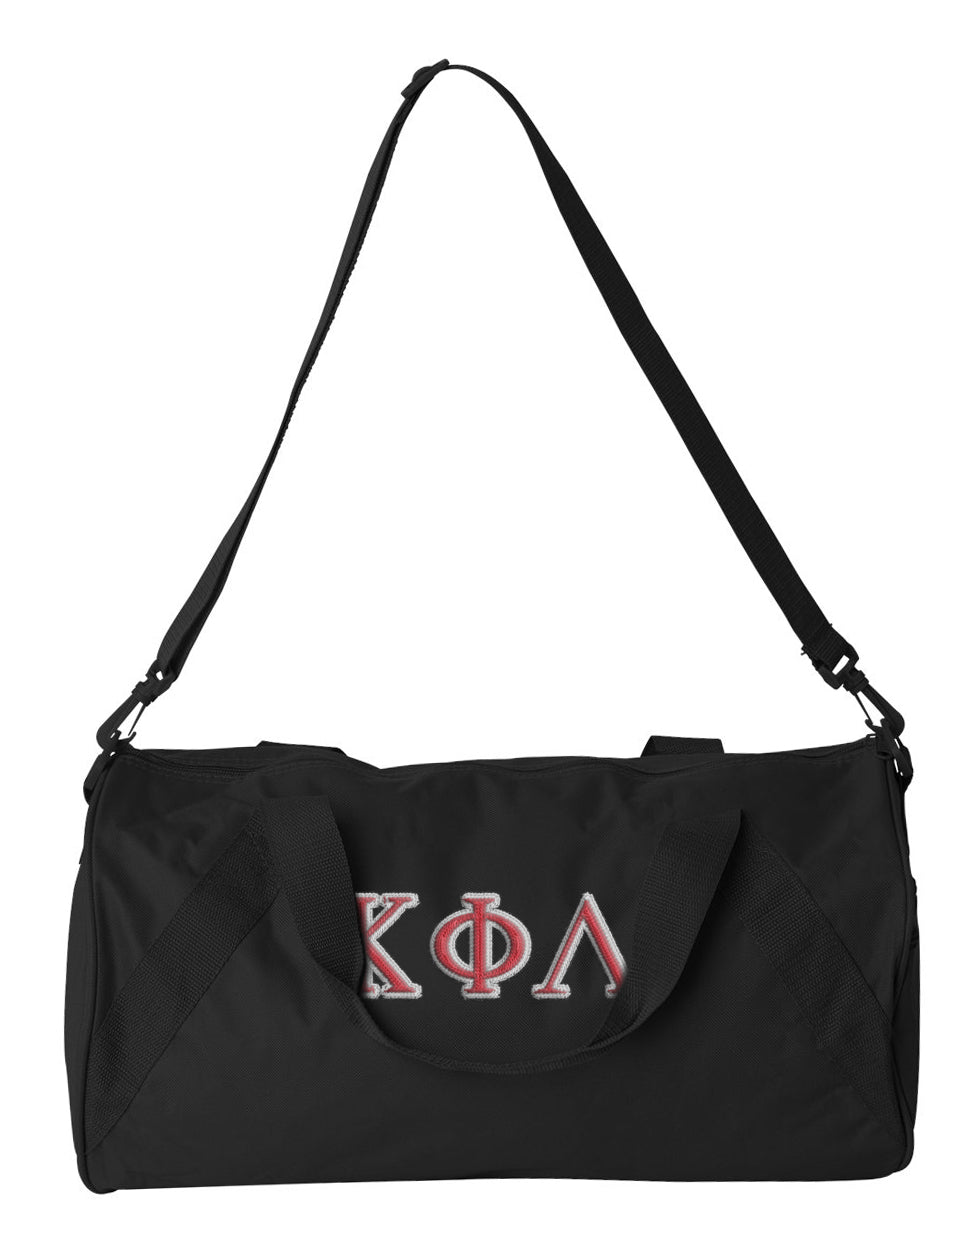 Kappa Phi Lambda Embroidered Duffel Bag